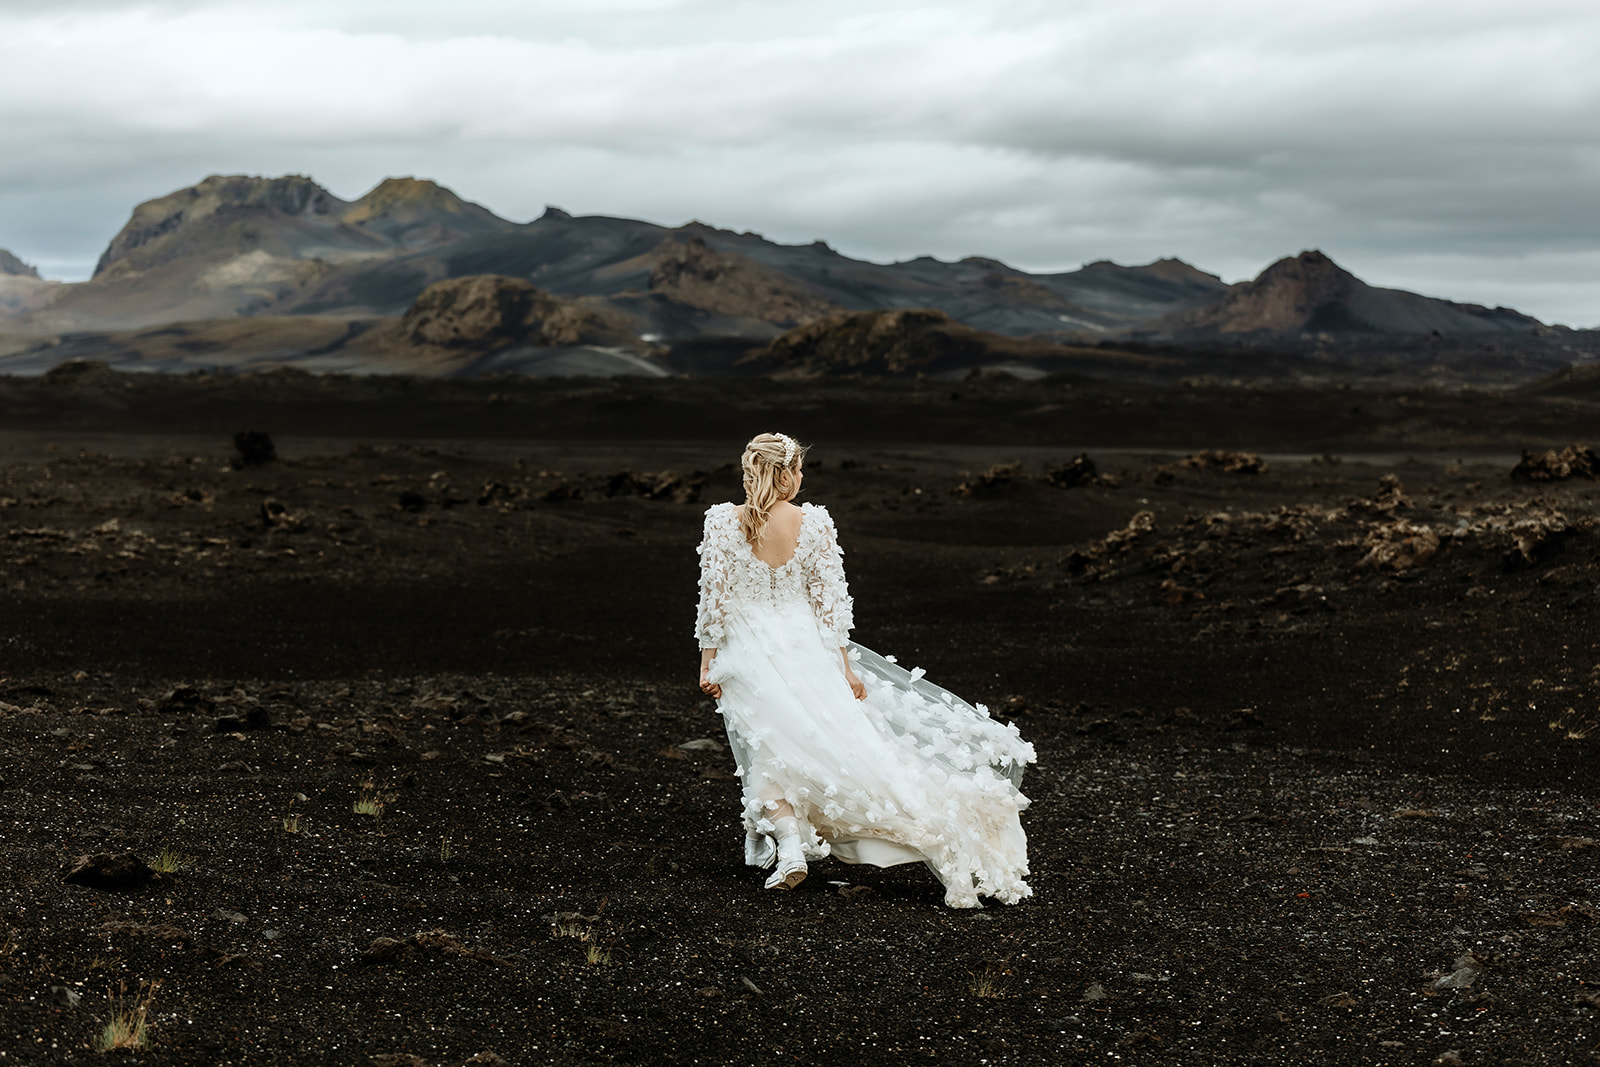 Bride in elegant wedding dress walking through dramatic Icelandic highlands, with rugged terrain and moody skies